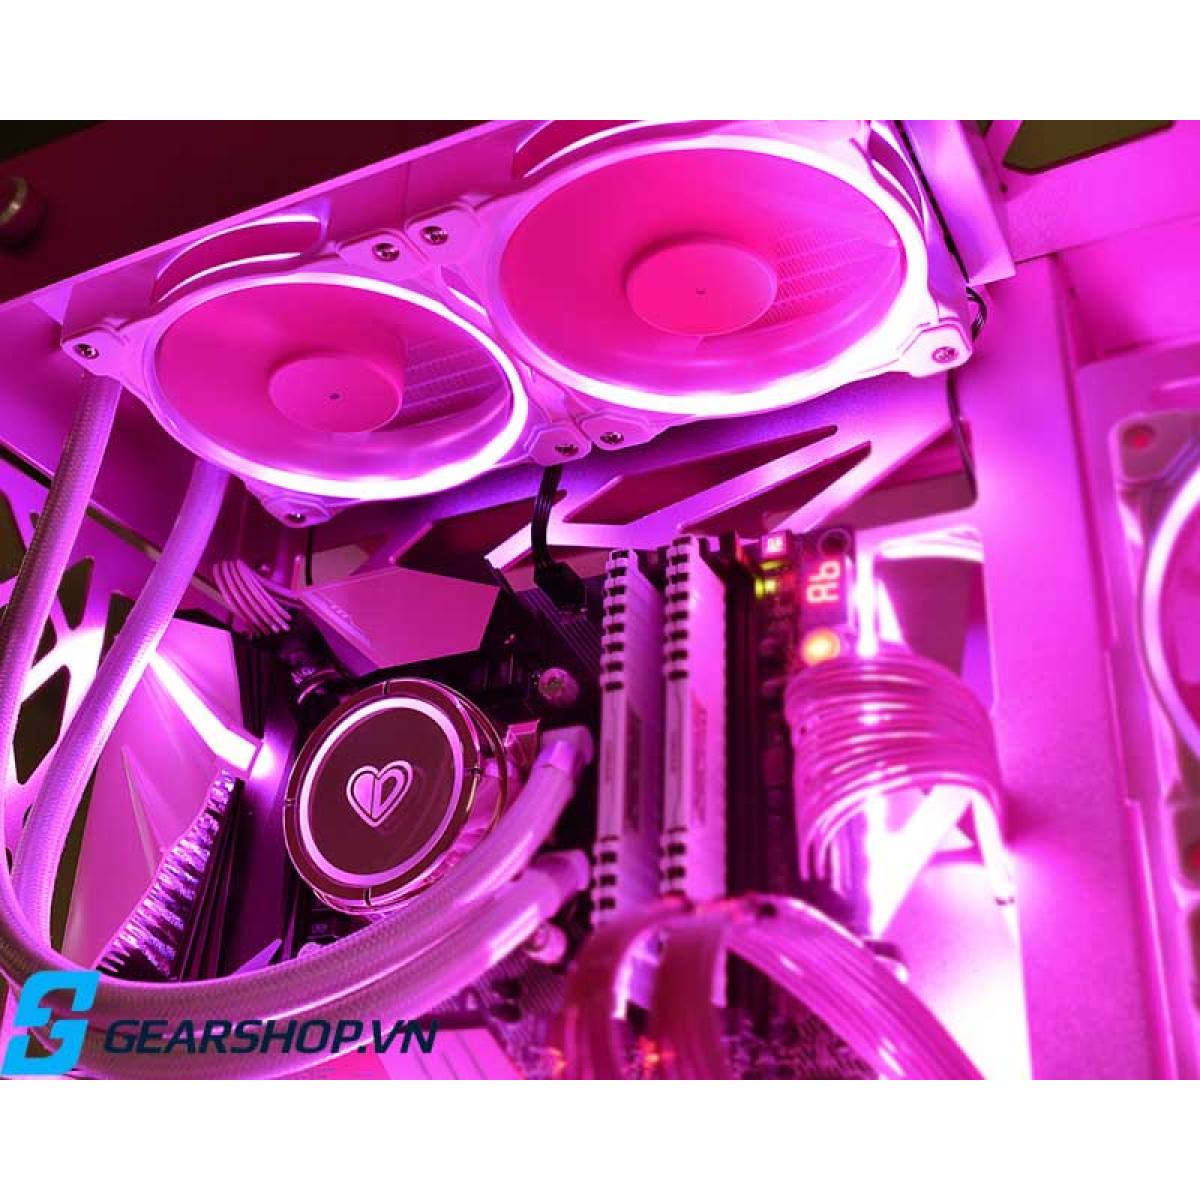 ID-Cooling Pinkflow 240 RGB